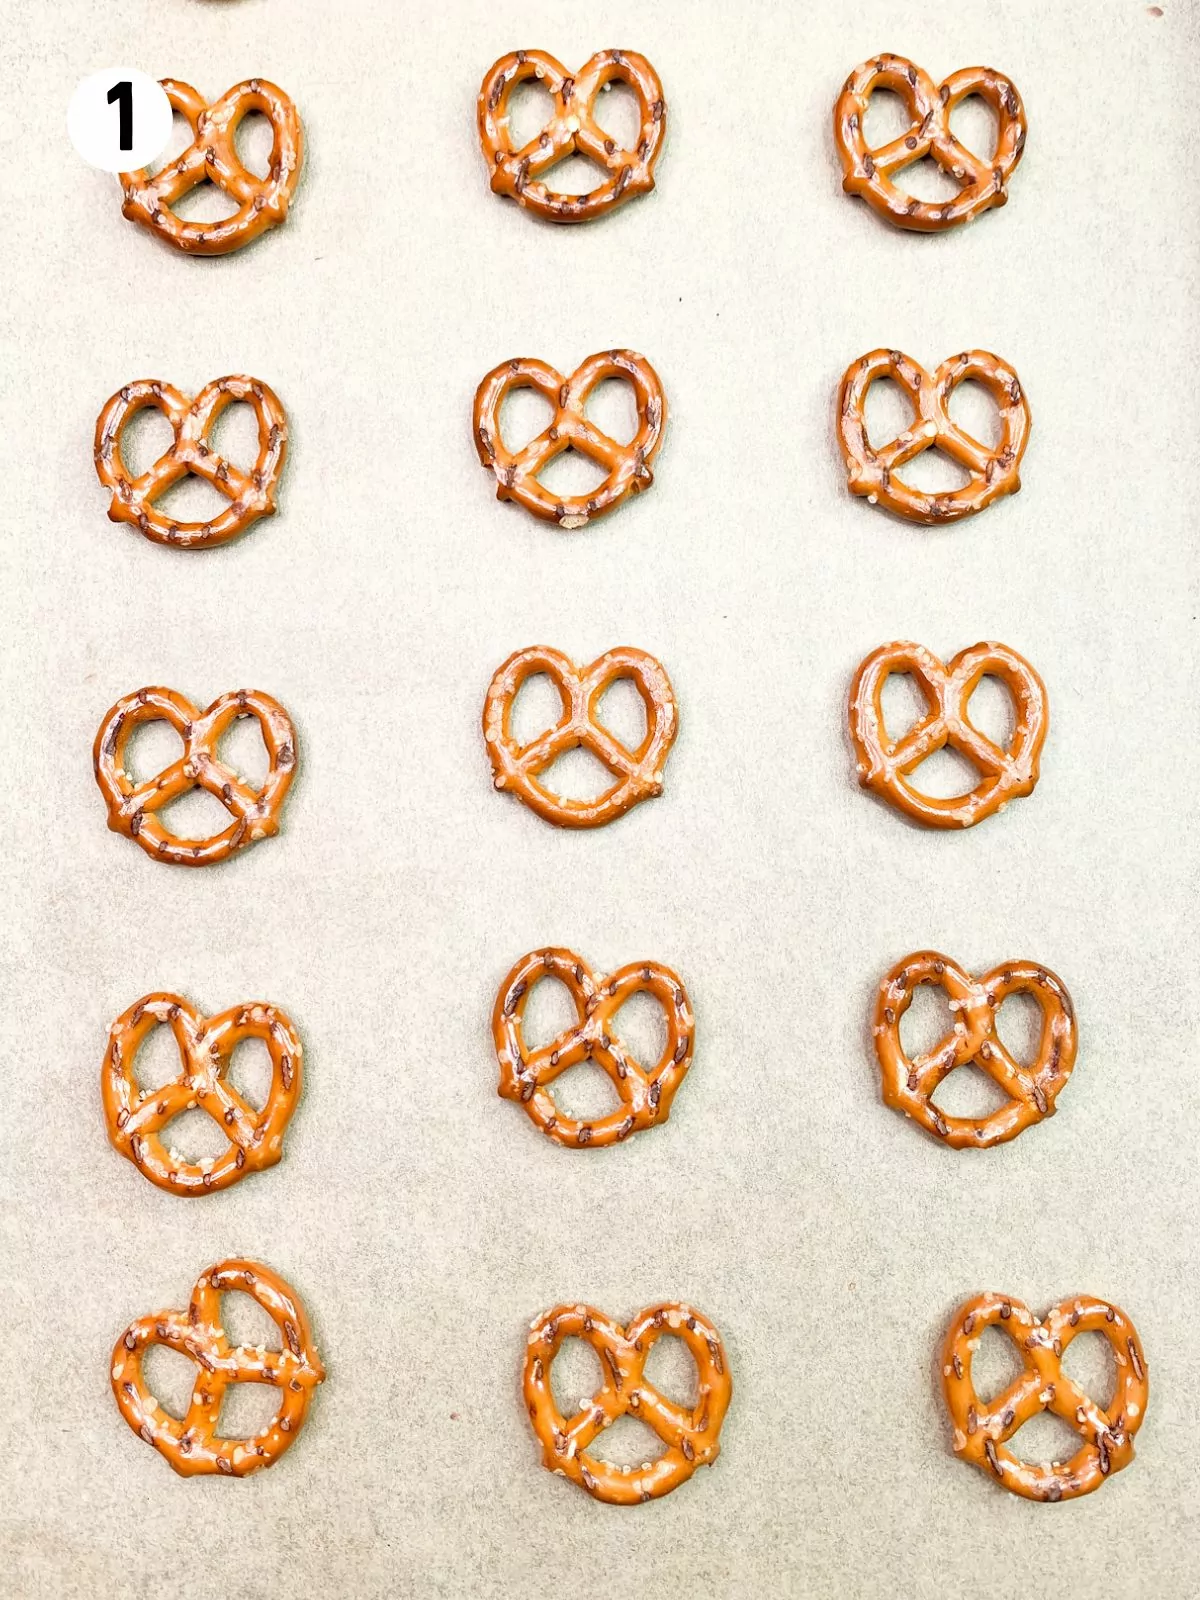 pretzel twists on baking tray.